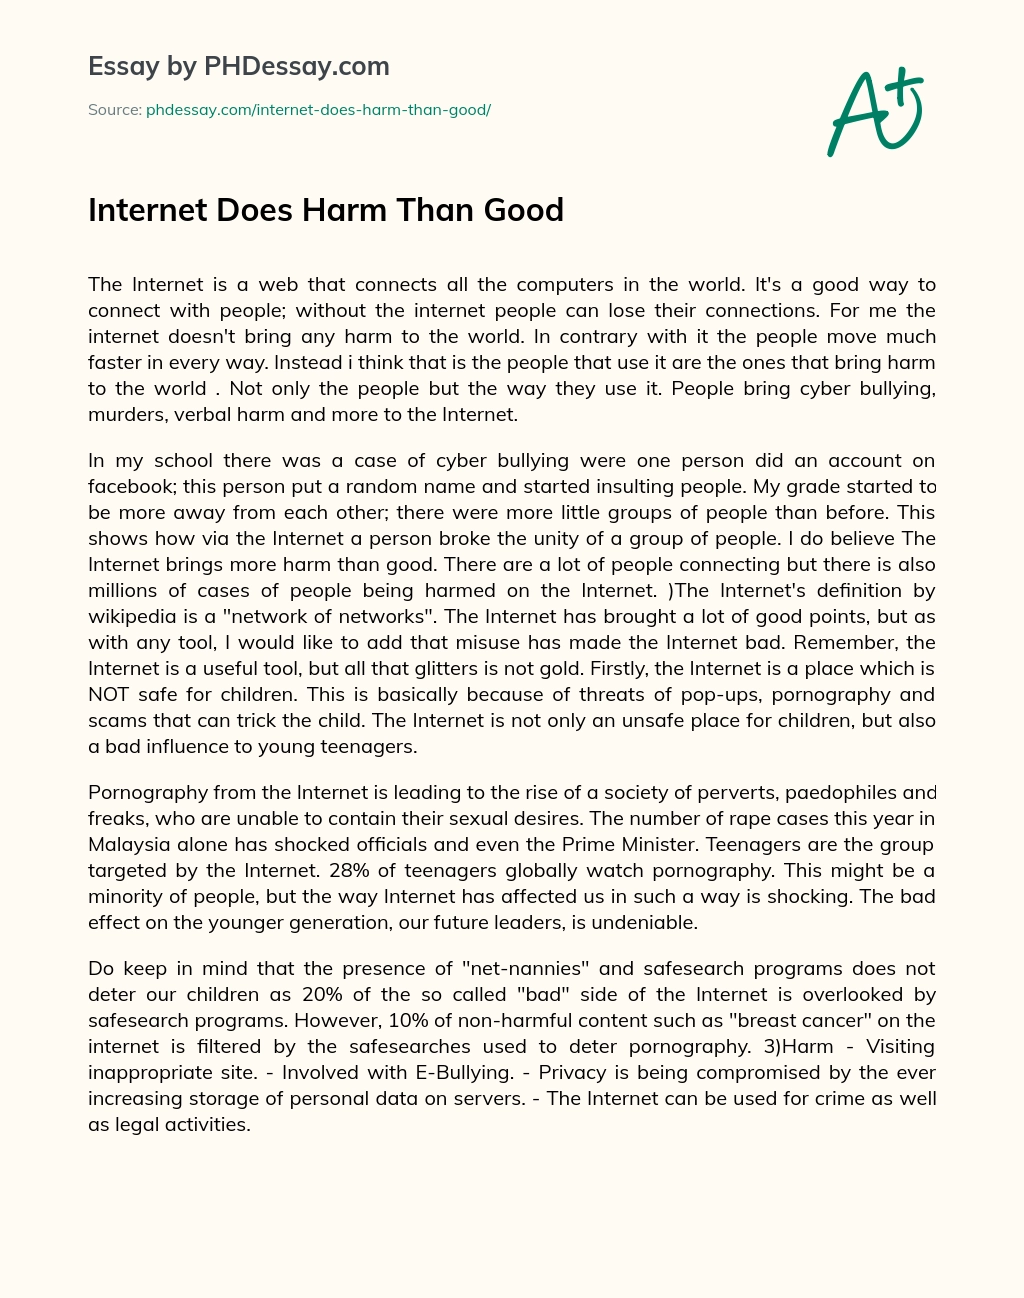 Internet Does Harm Than Good essay